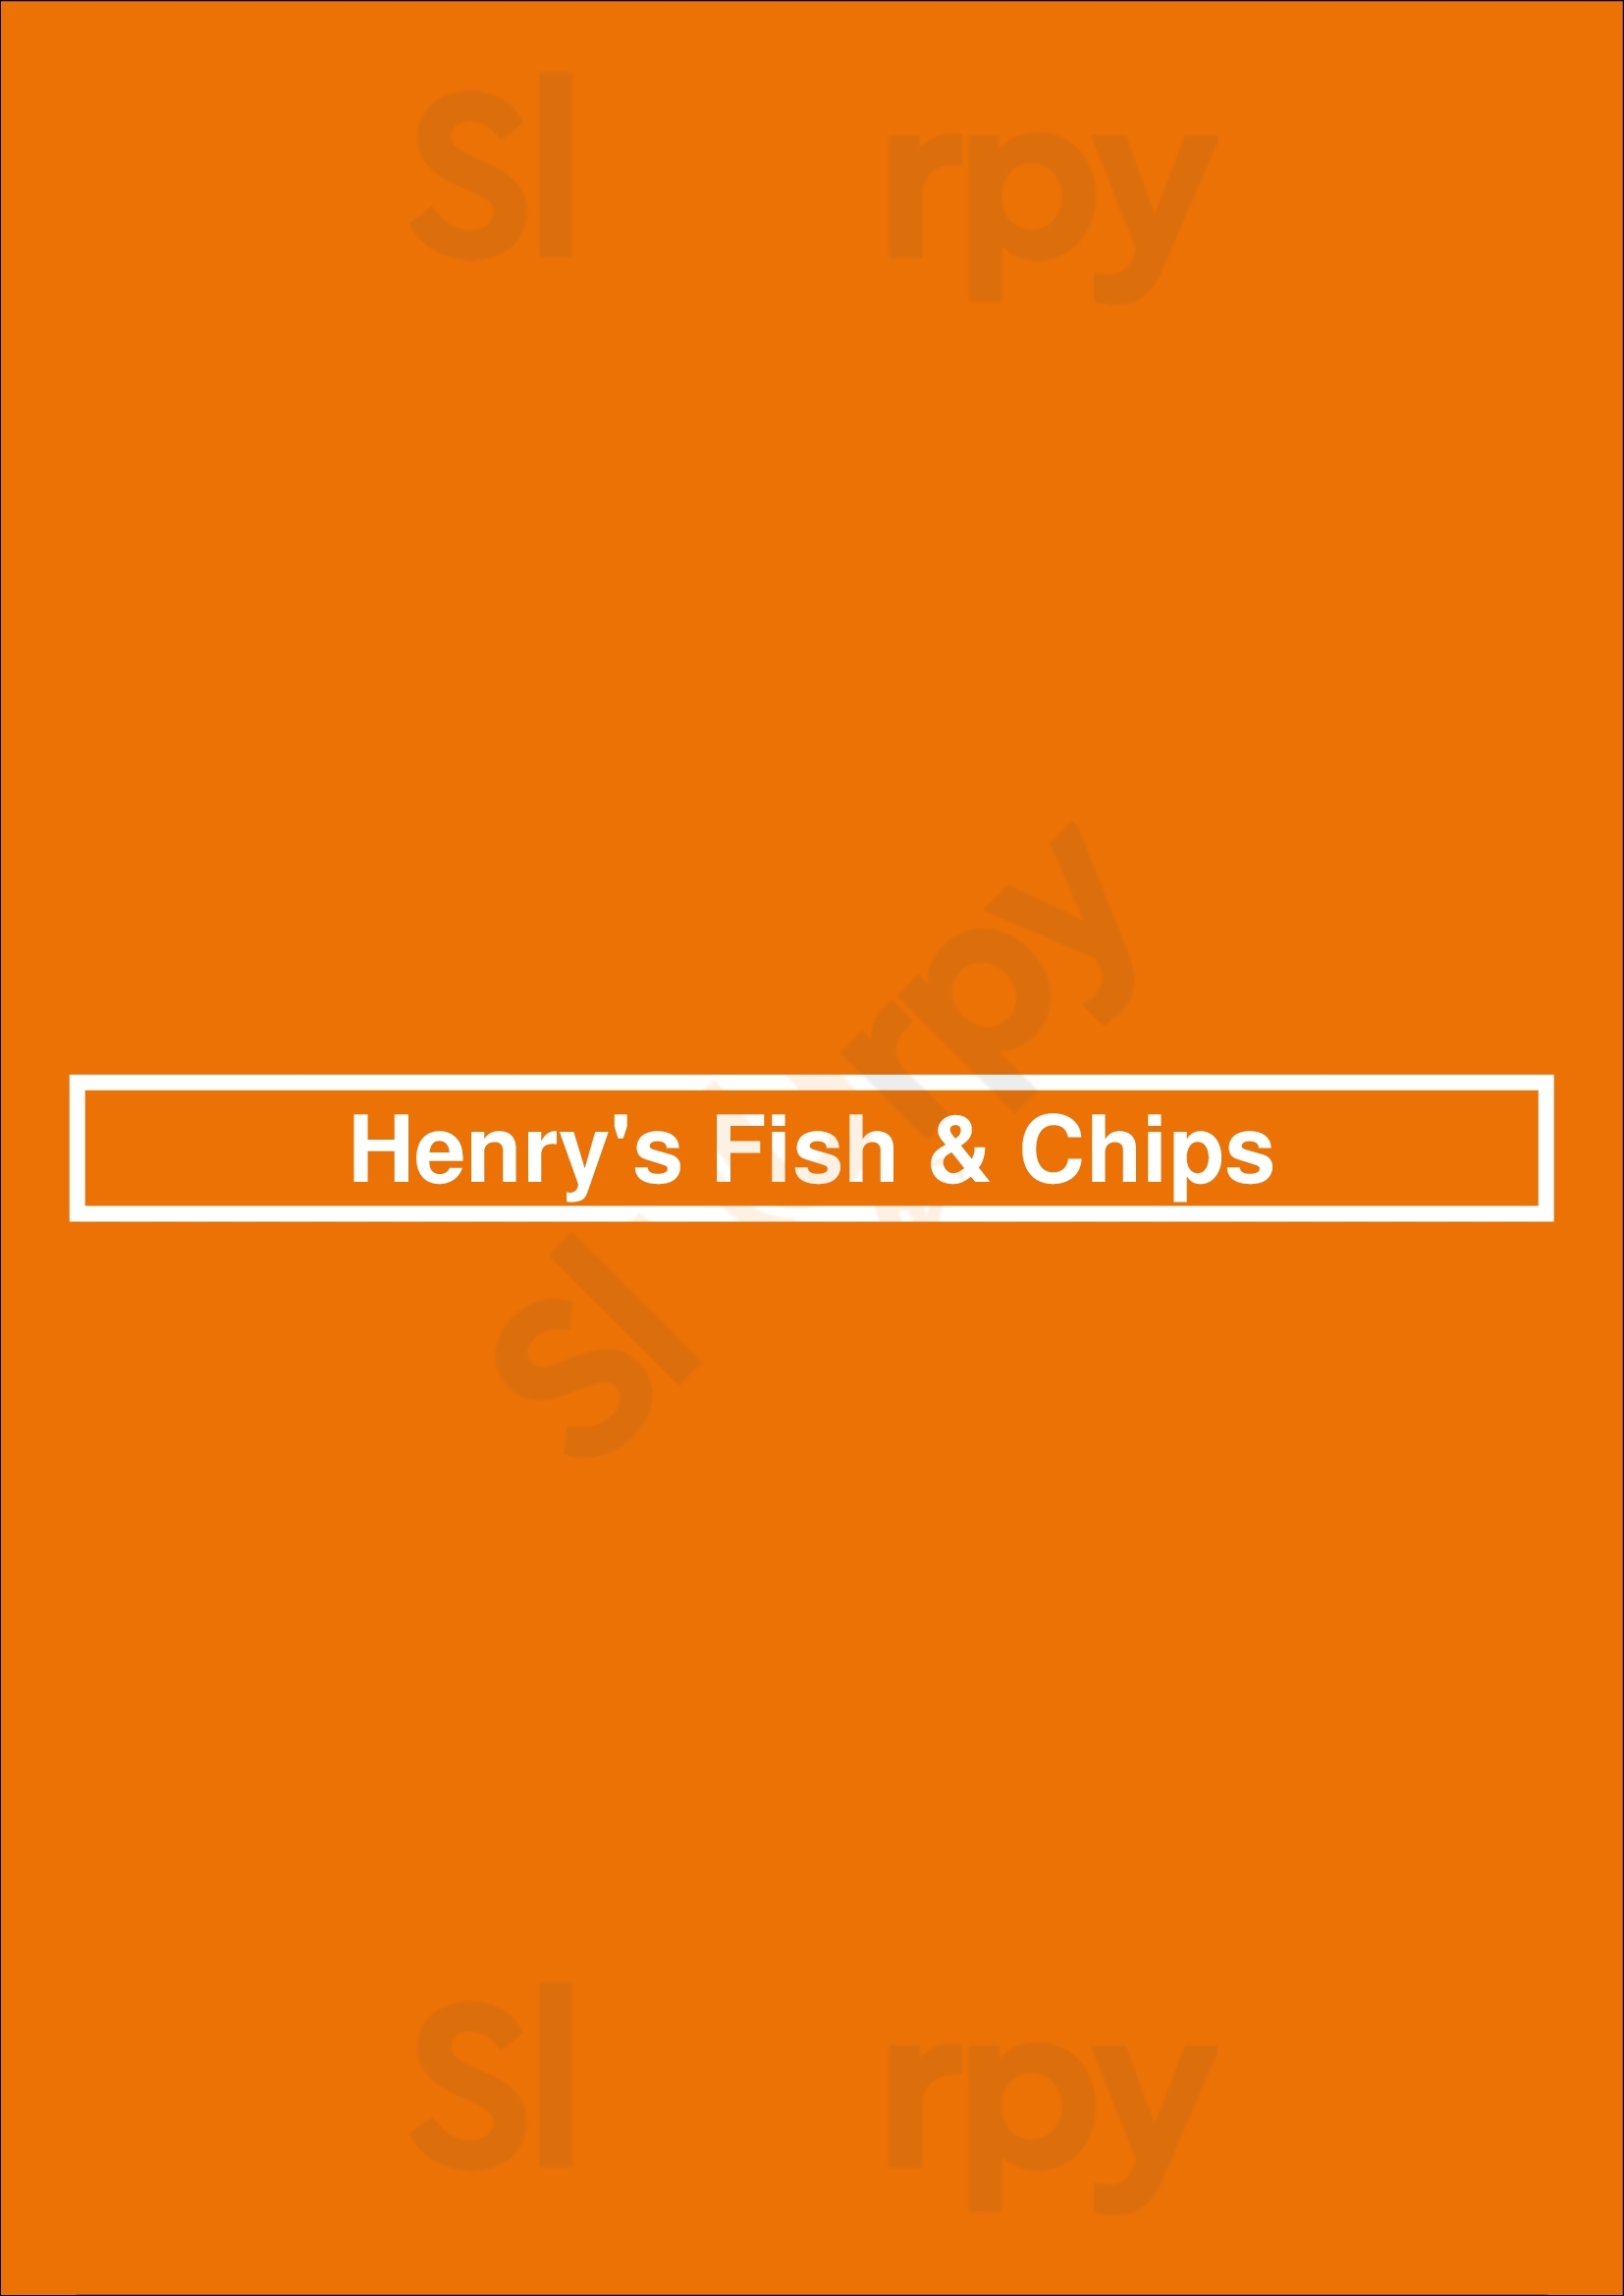 Henry's Fish & Chips Brampton Menu - 1